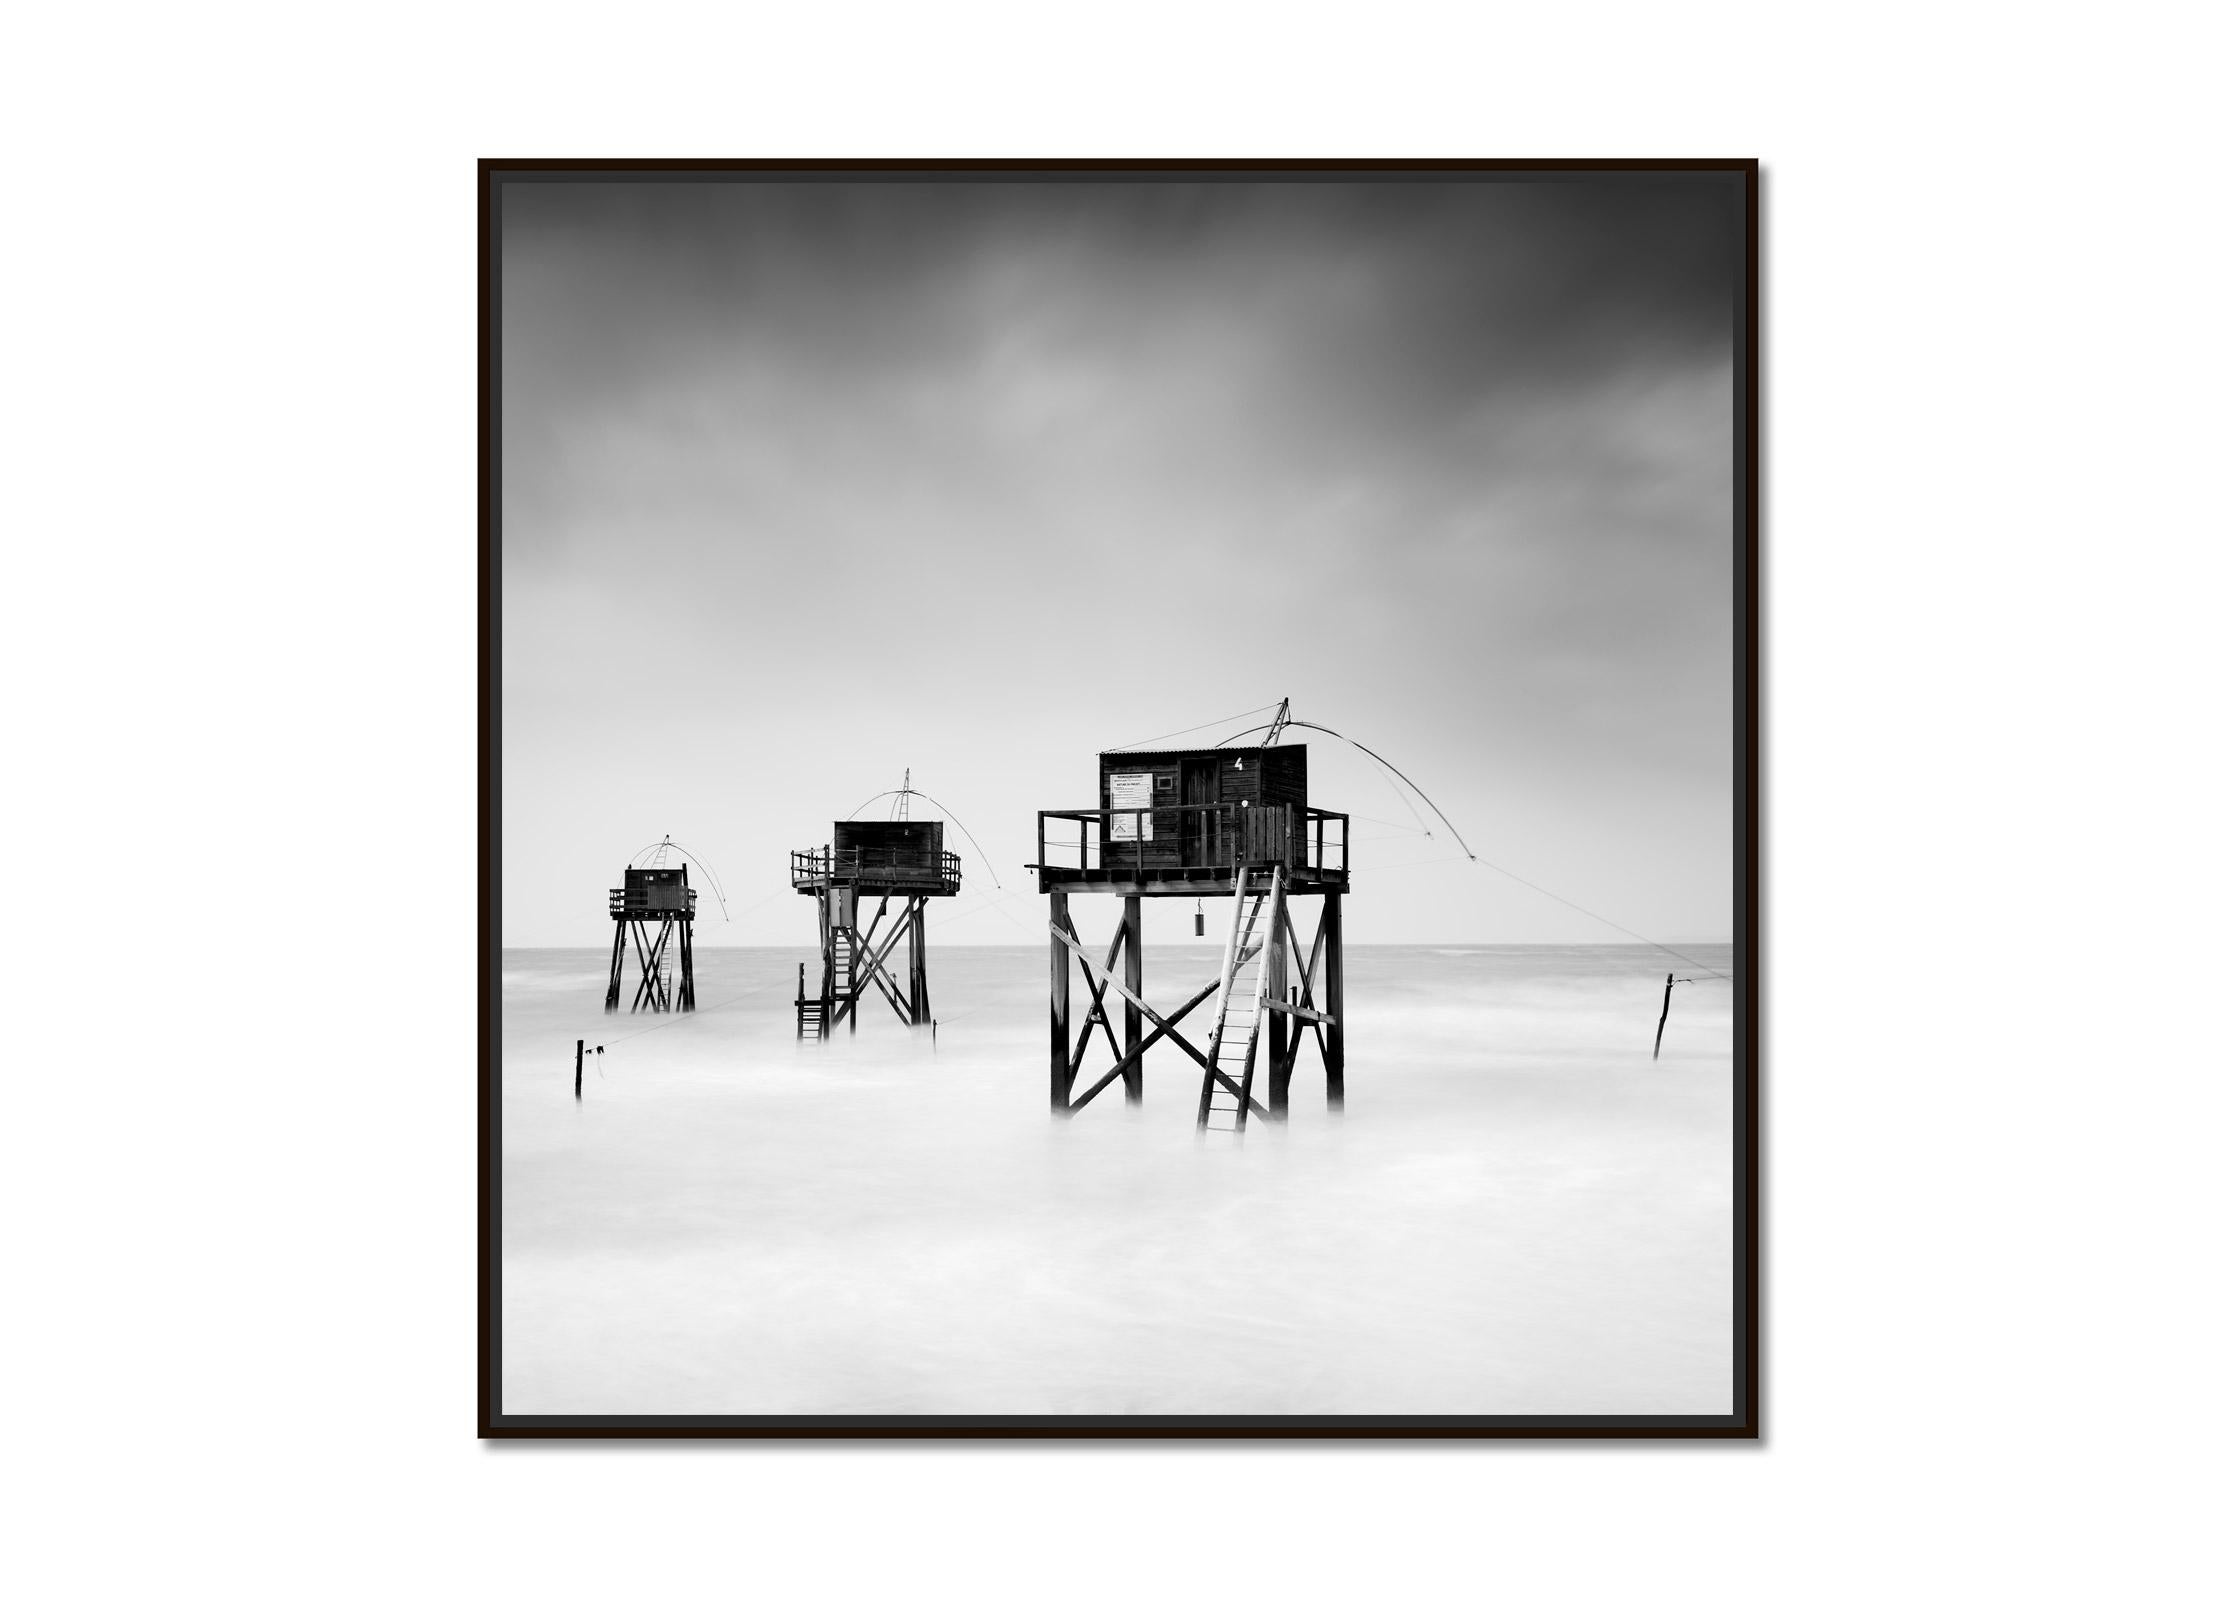 Fishing Hut on Stilts, atlantic coast, France, black and white landscape photo - Photograph by Gerald Berghammer